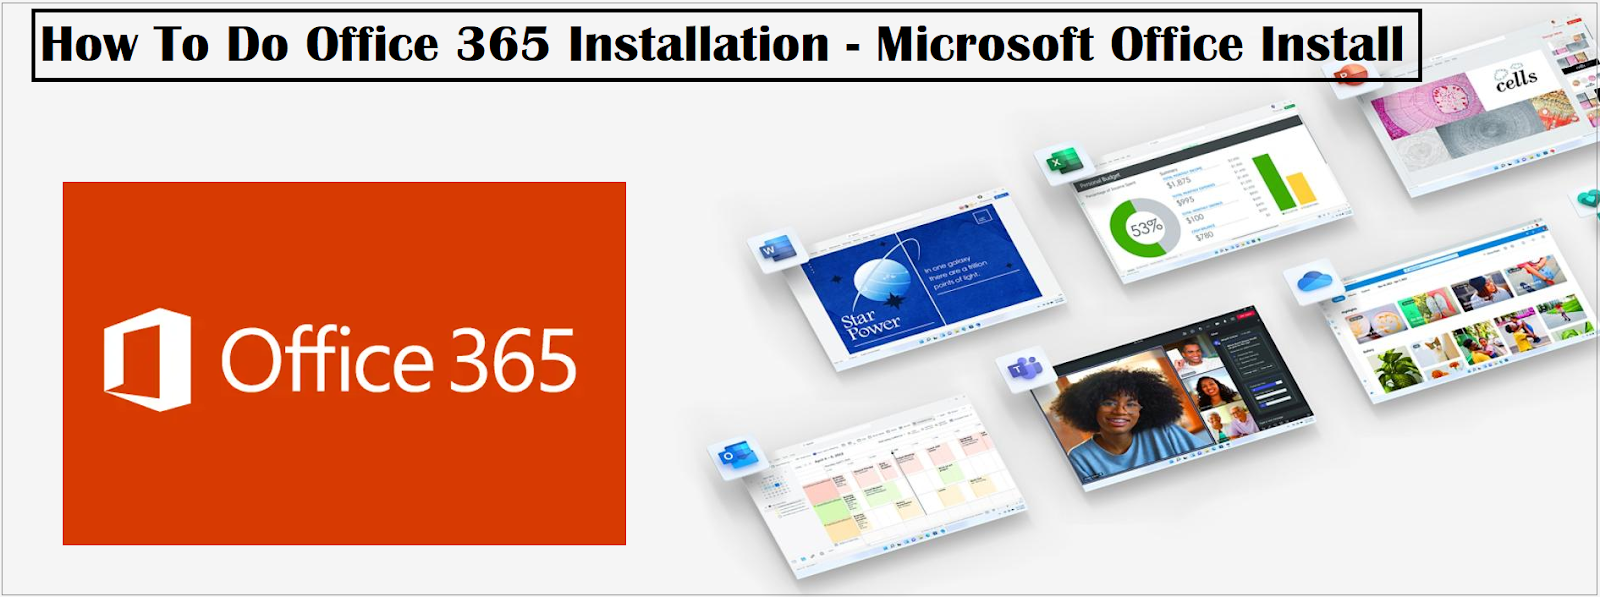 Office 365 Installation